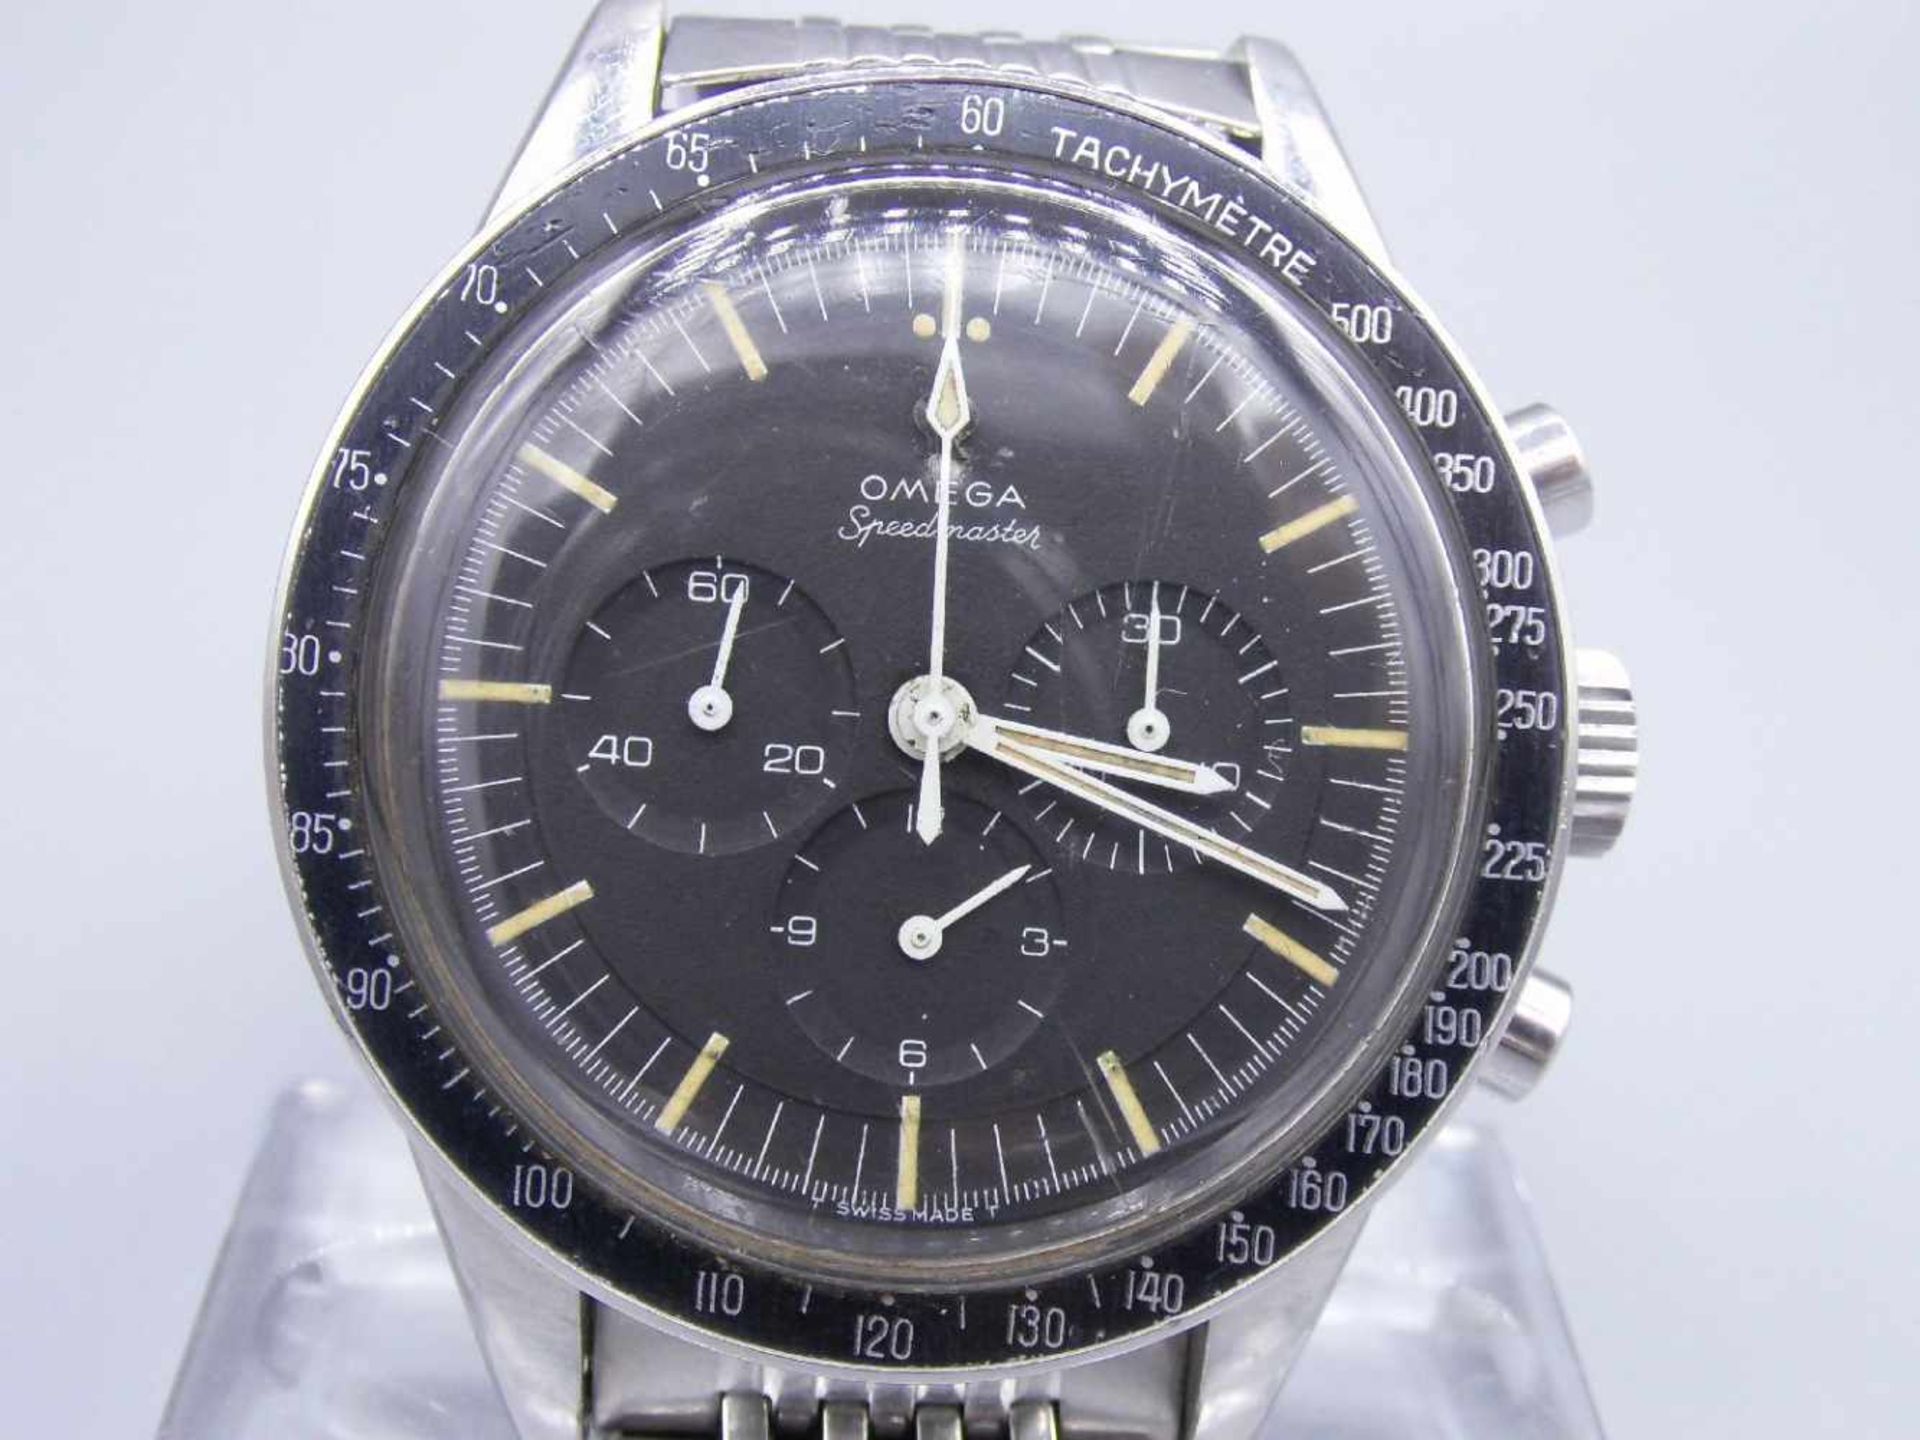 VINTAGE ARMBANDUHR / CHRONOGRAPH - Omega Speedmaster / wristwatch, Handaufzug, 1960er Jahre ( - Bild 6 aus 13